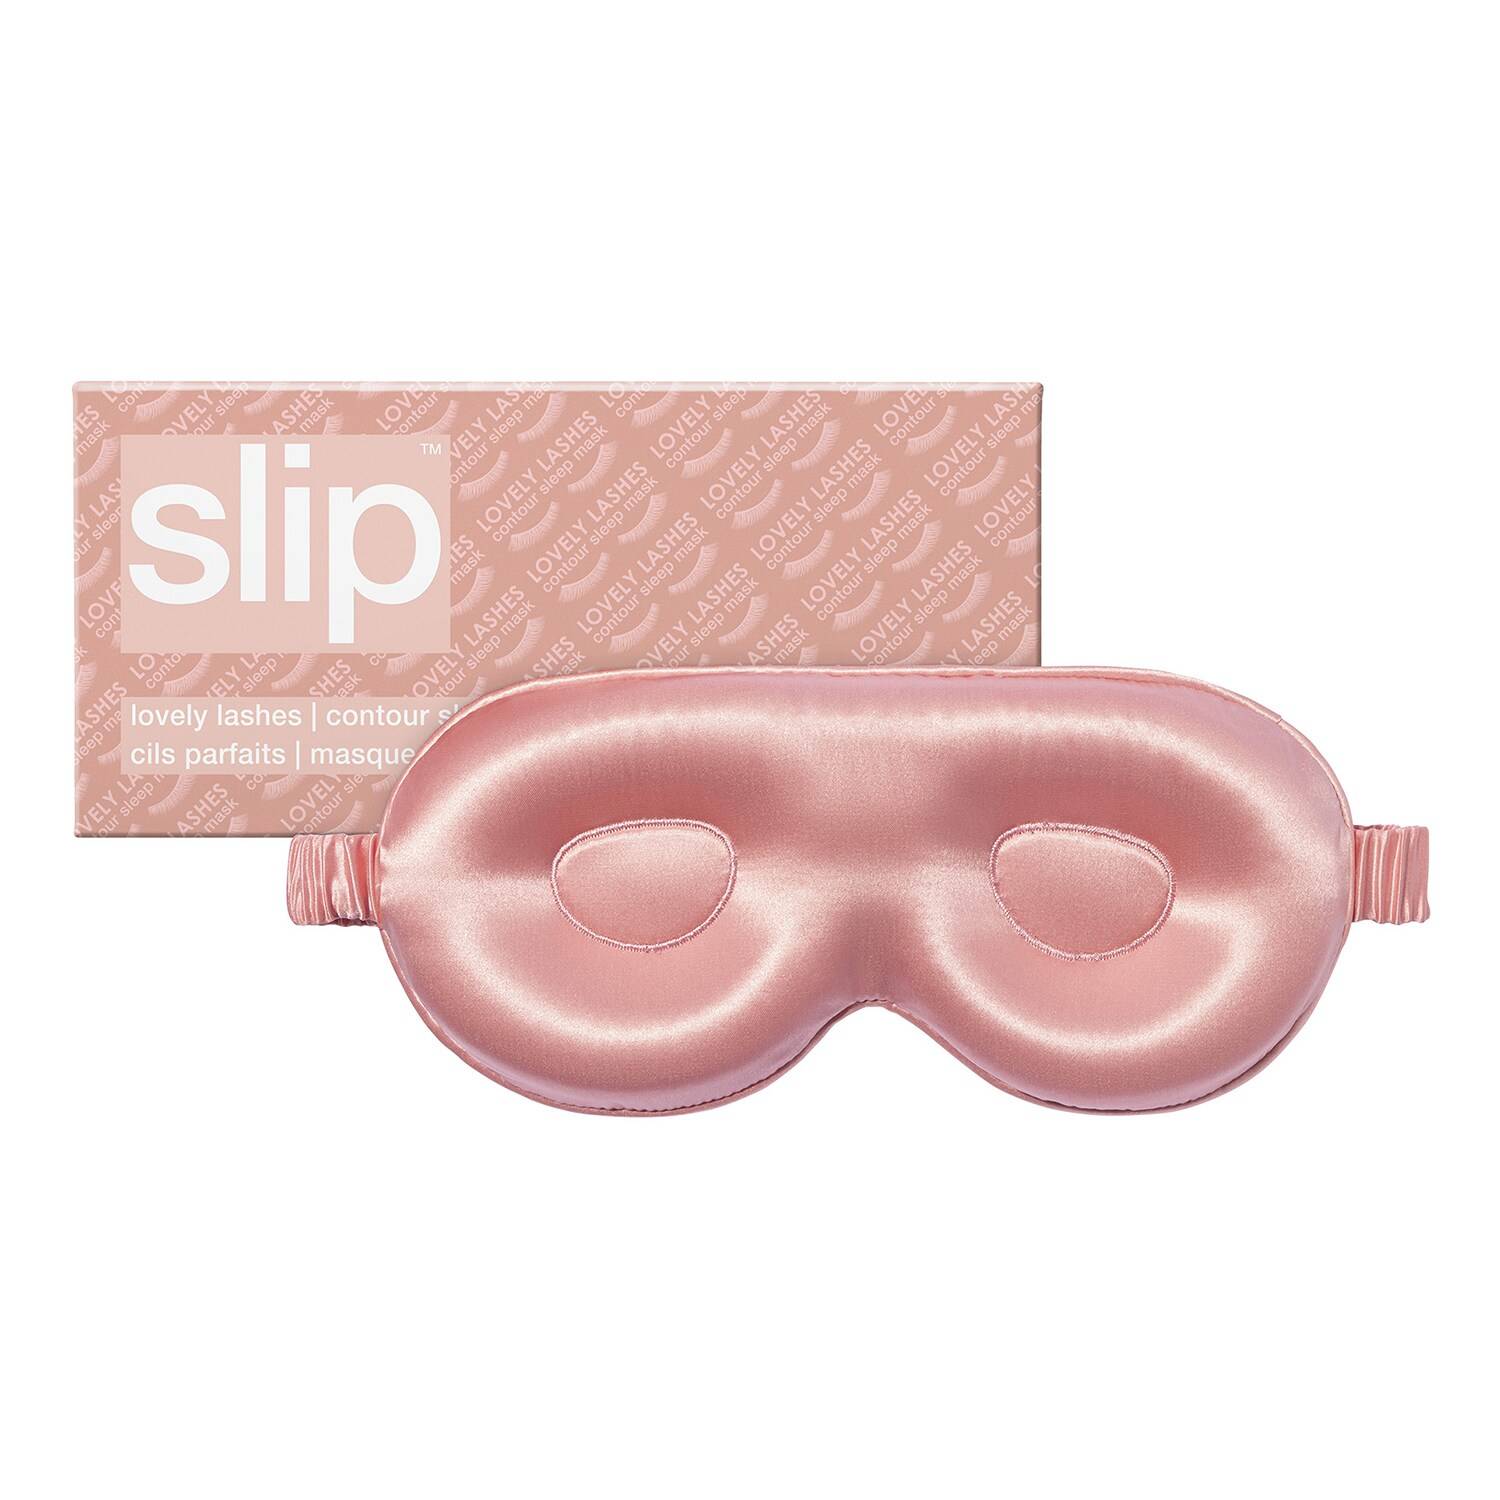 Slip Pure Silk Contour Sleep Mask Rose